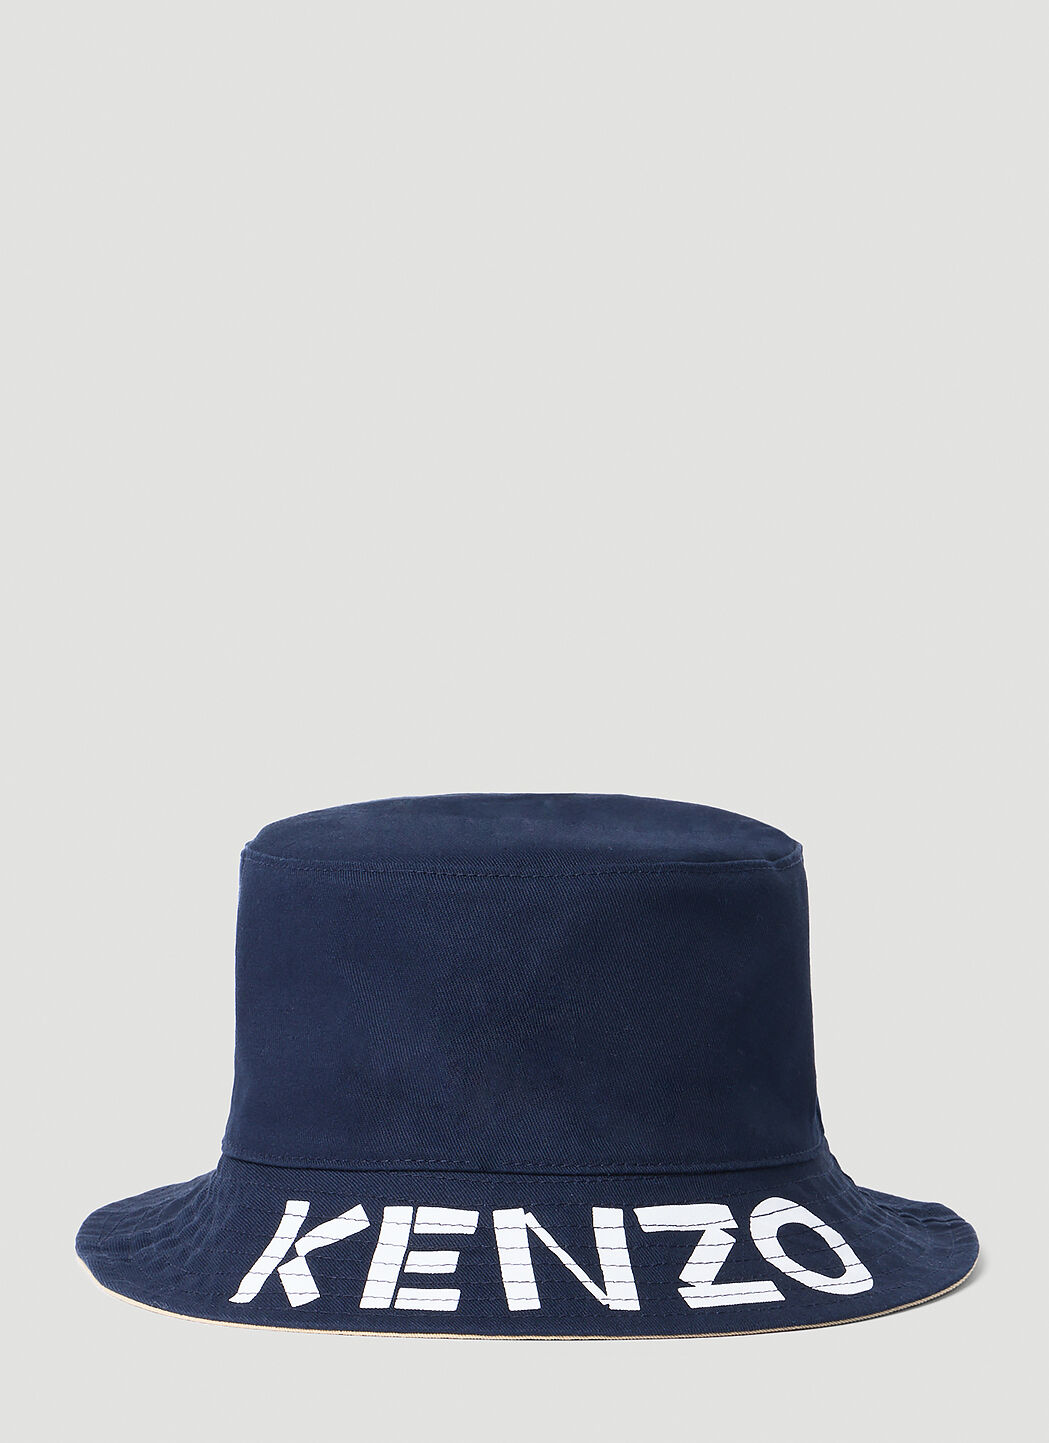 Kenzo リバーシブルロゴプリントバケットハット グリーン knz0253017